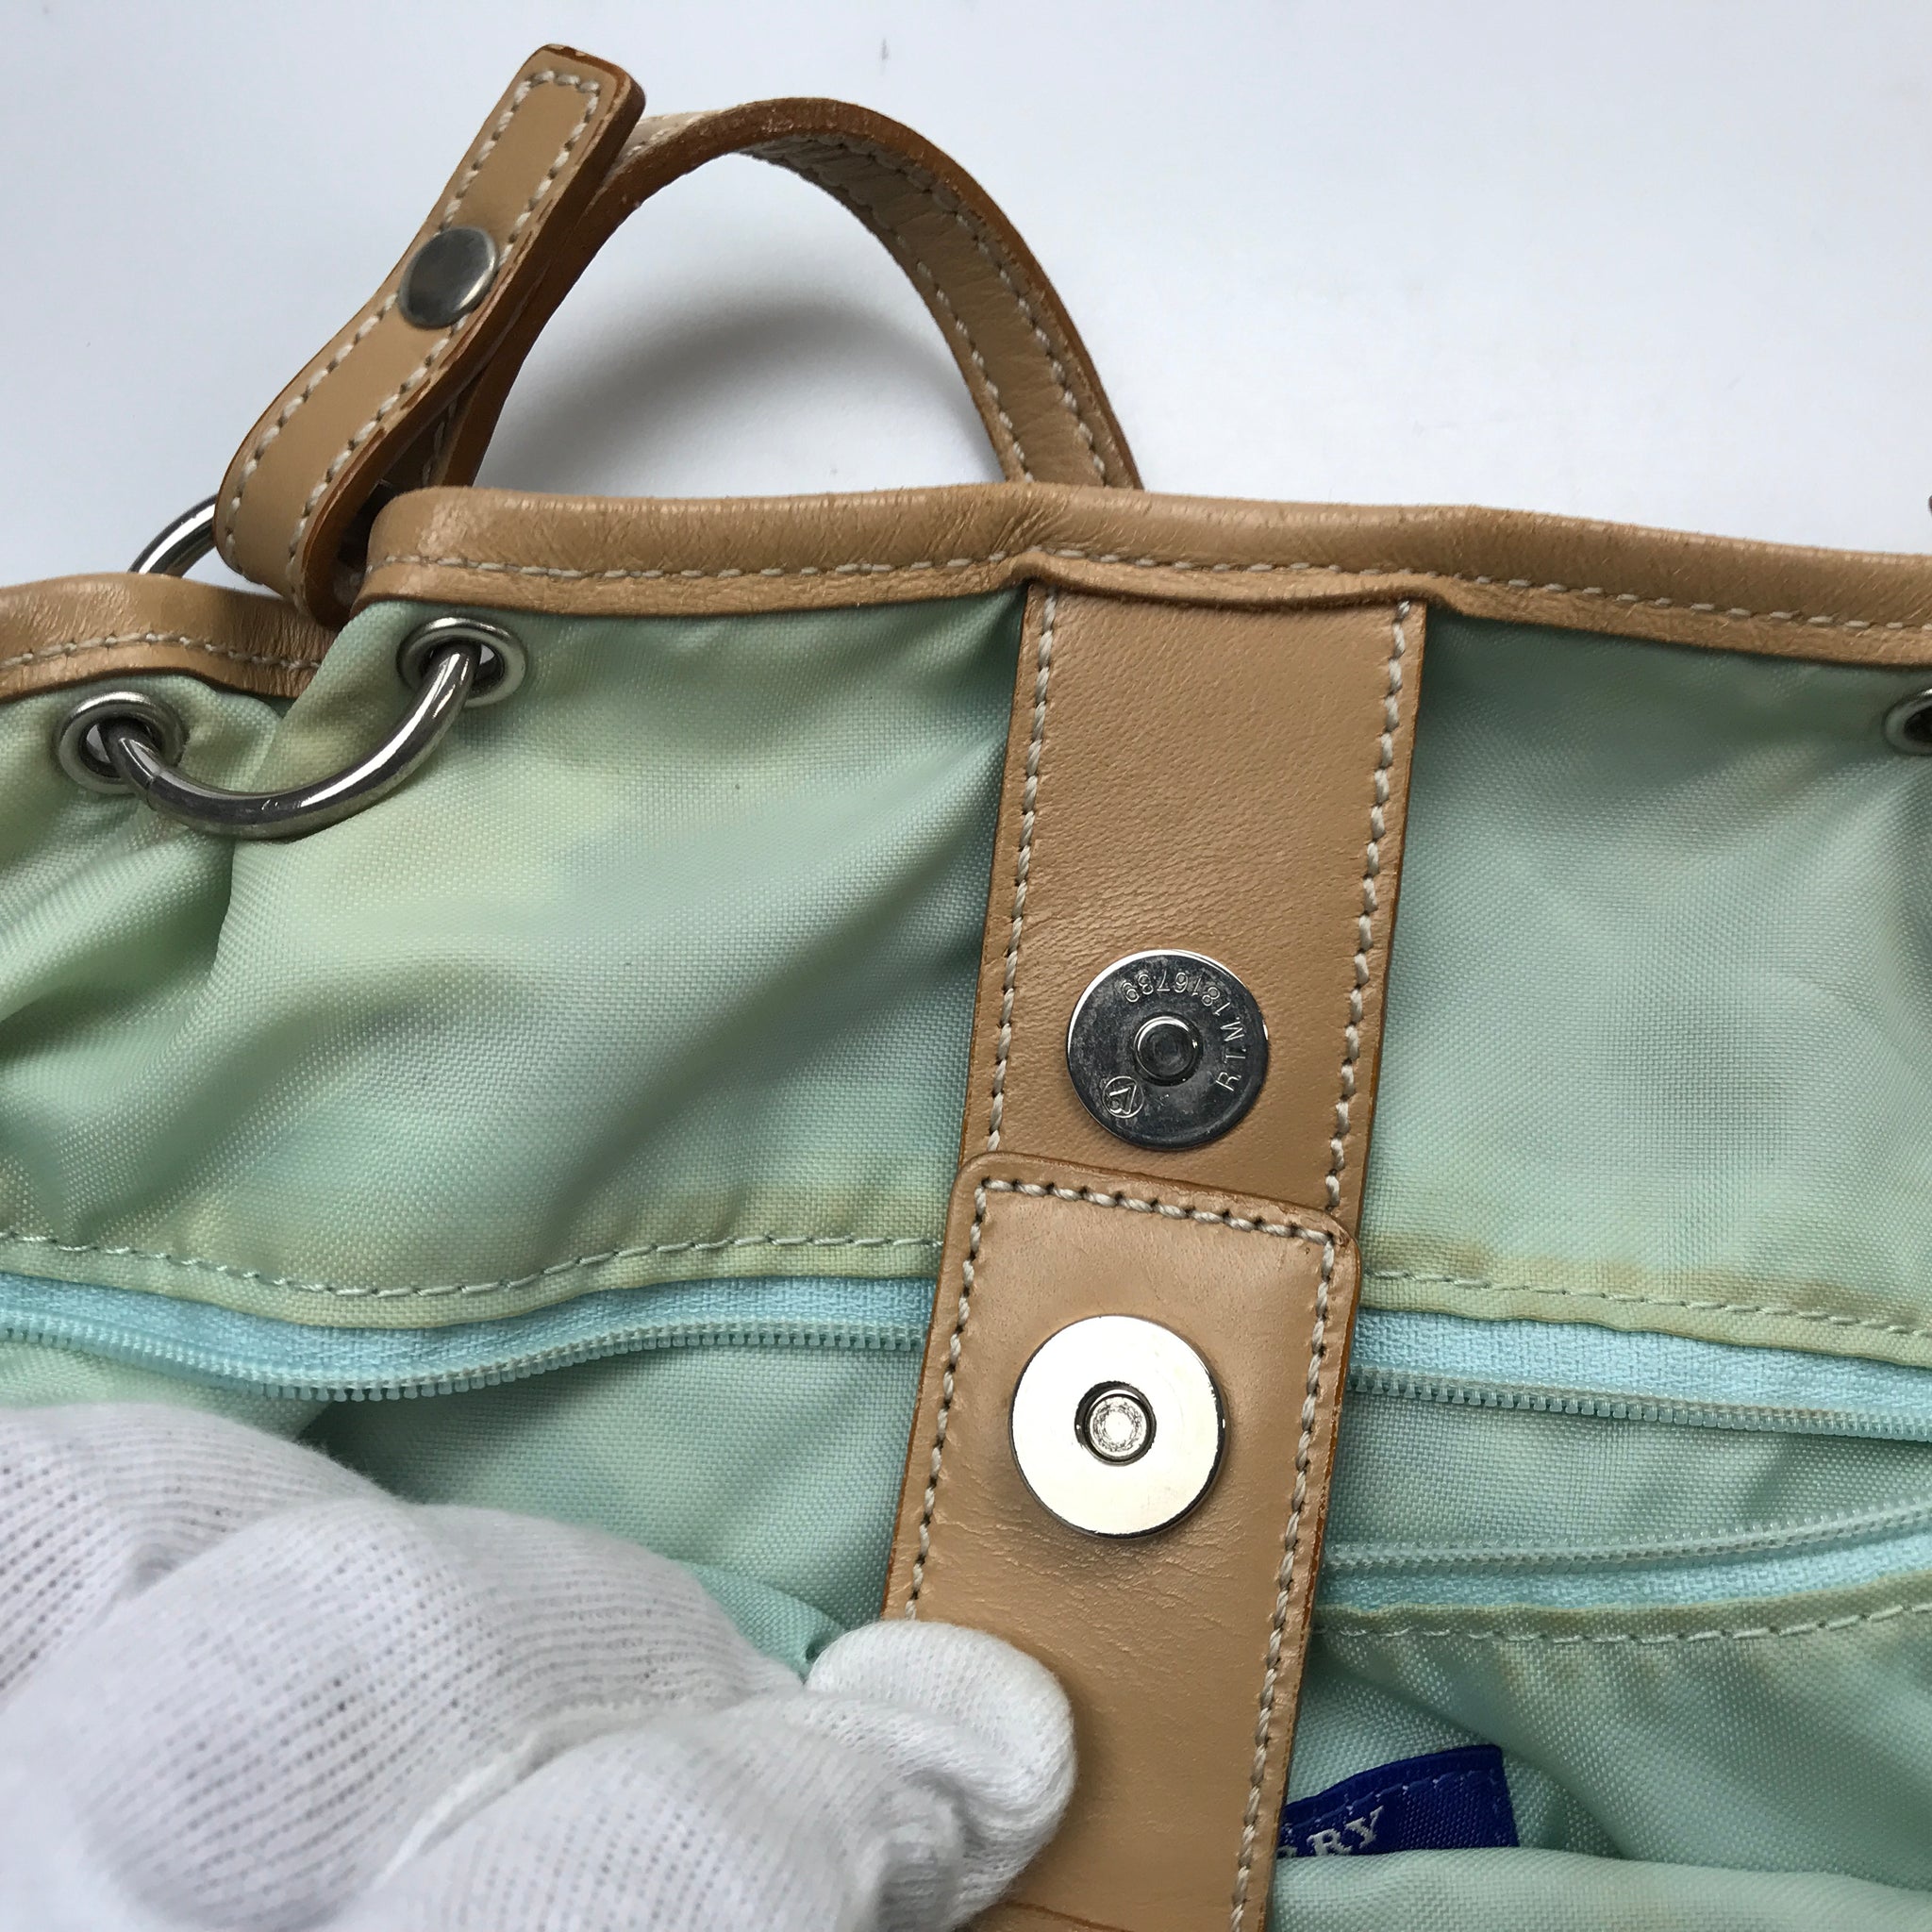 100% Authentic Burberry Blue Label Handbag